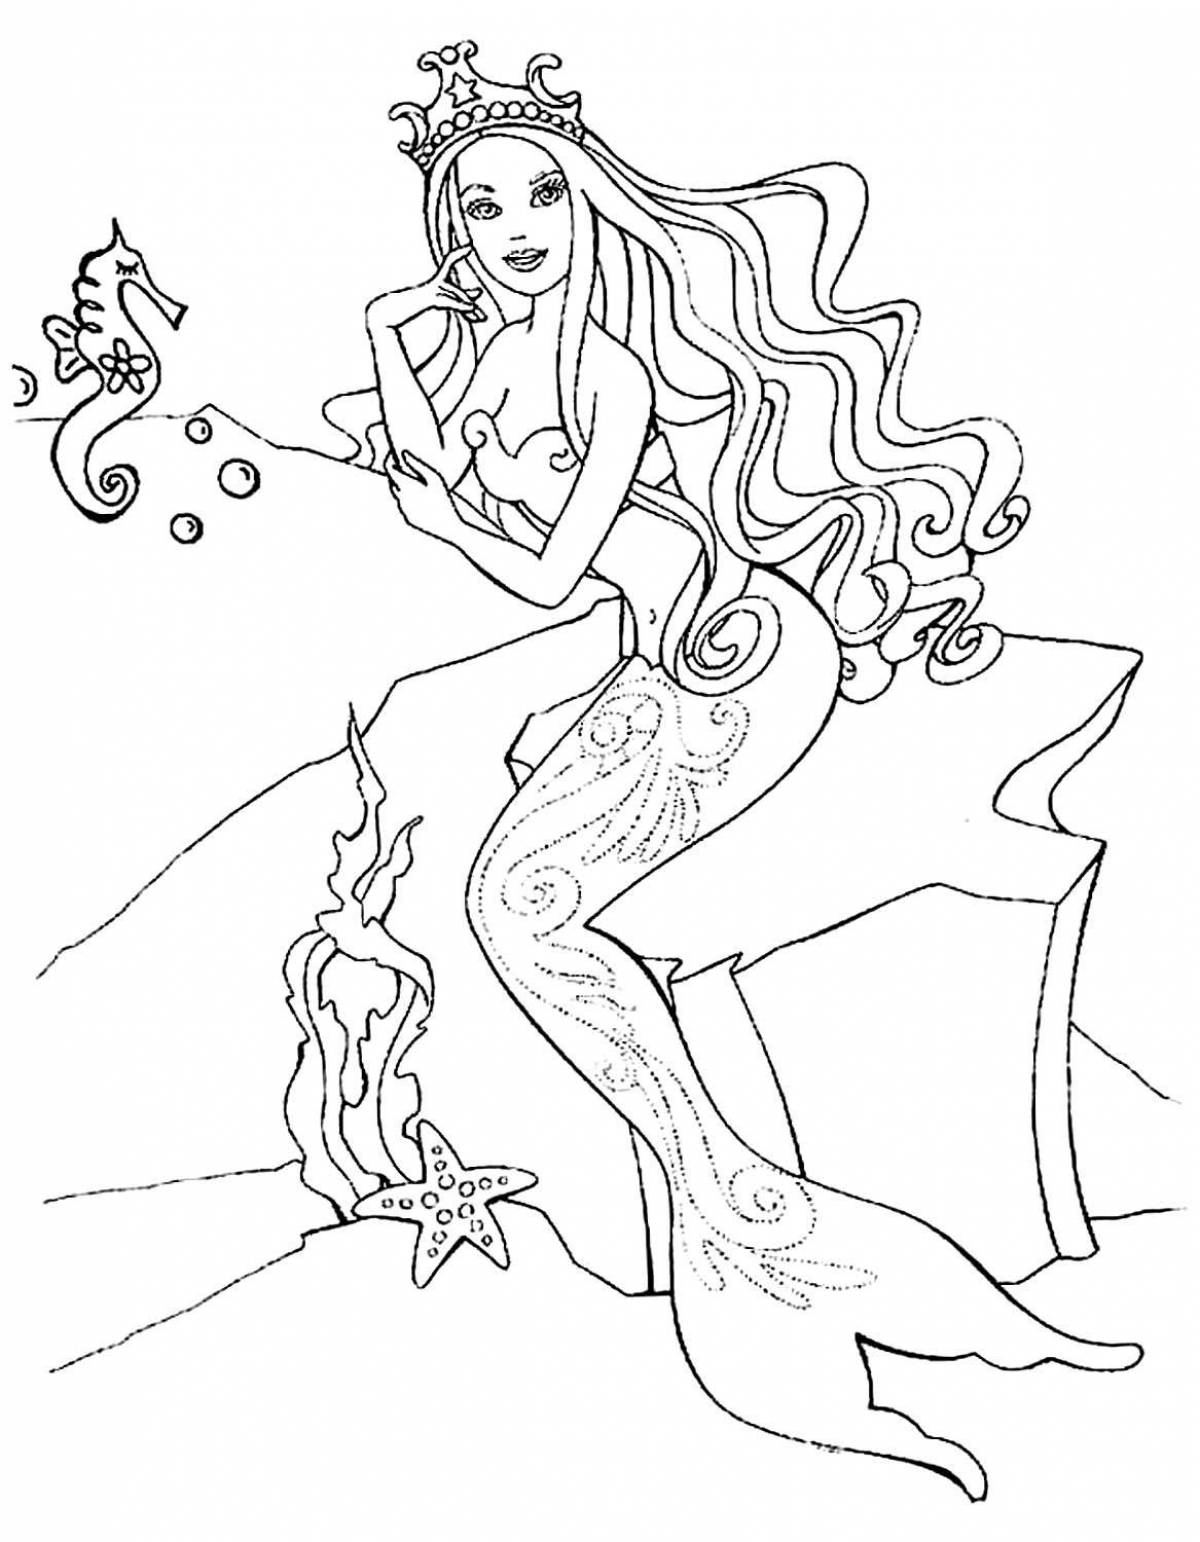 Adorable barbie mermaid coloring page